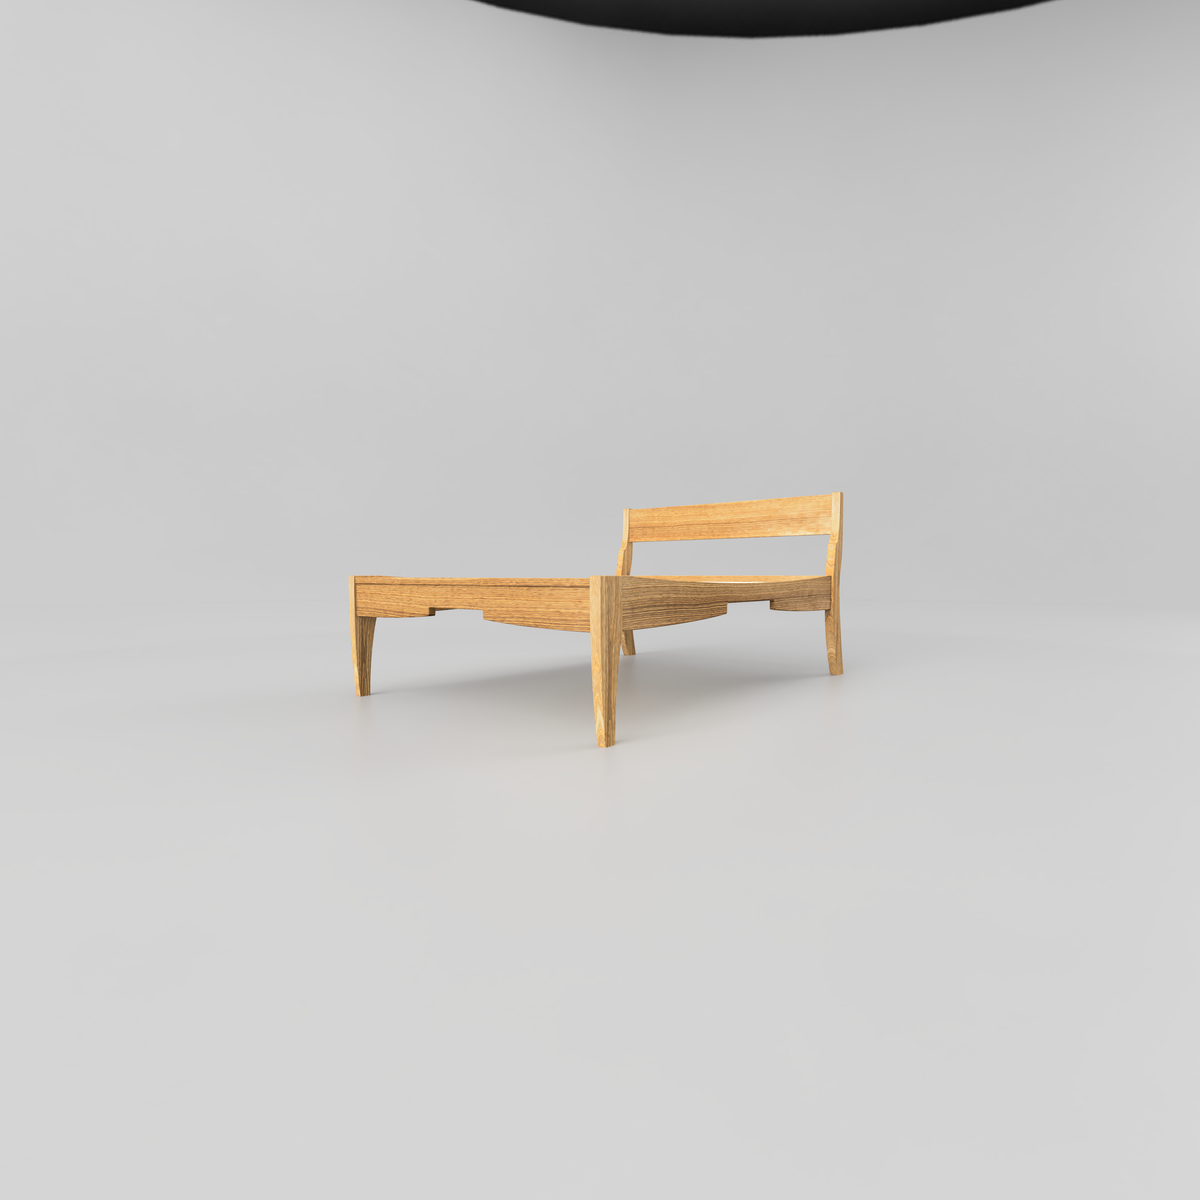 wood mathewson standard bed frame